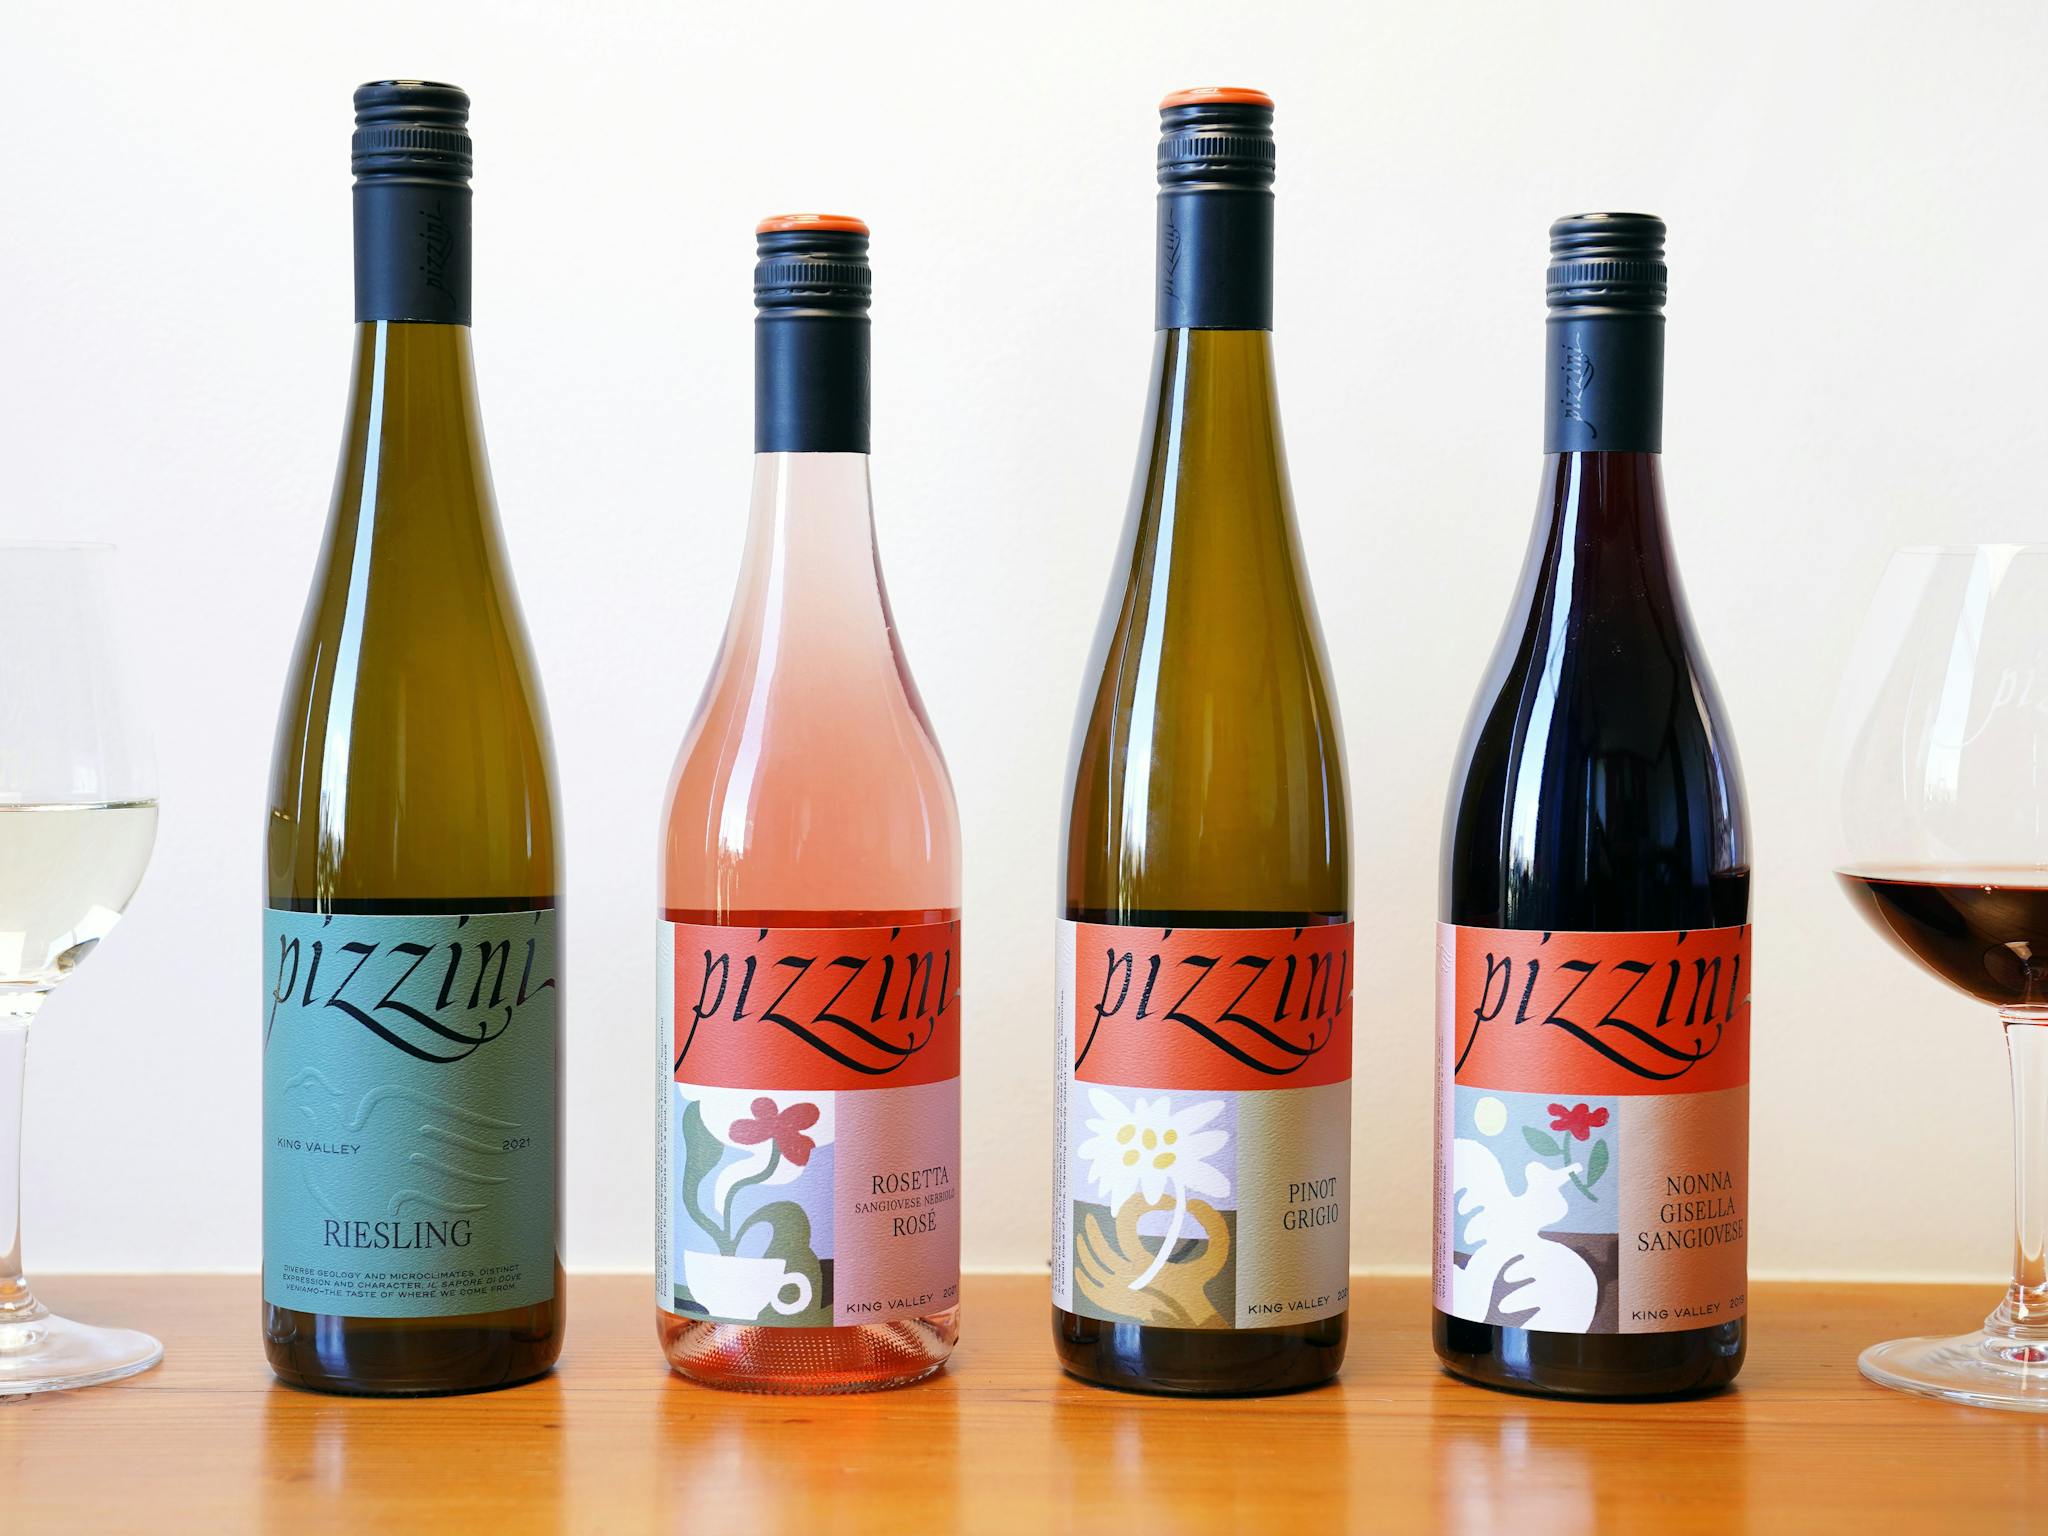 Pizzini wine bottles